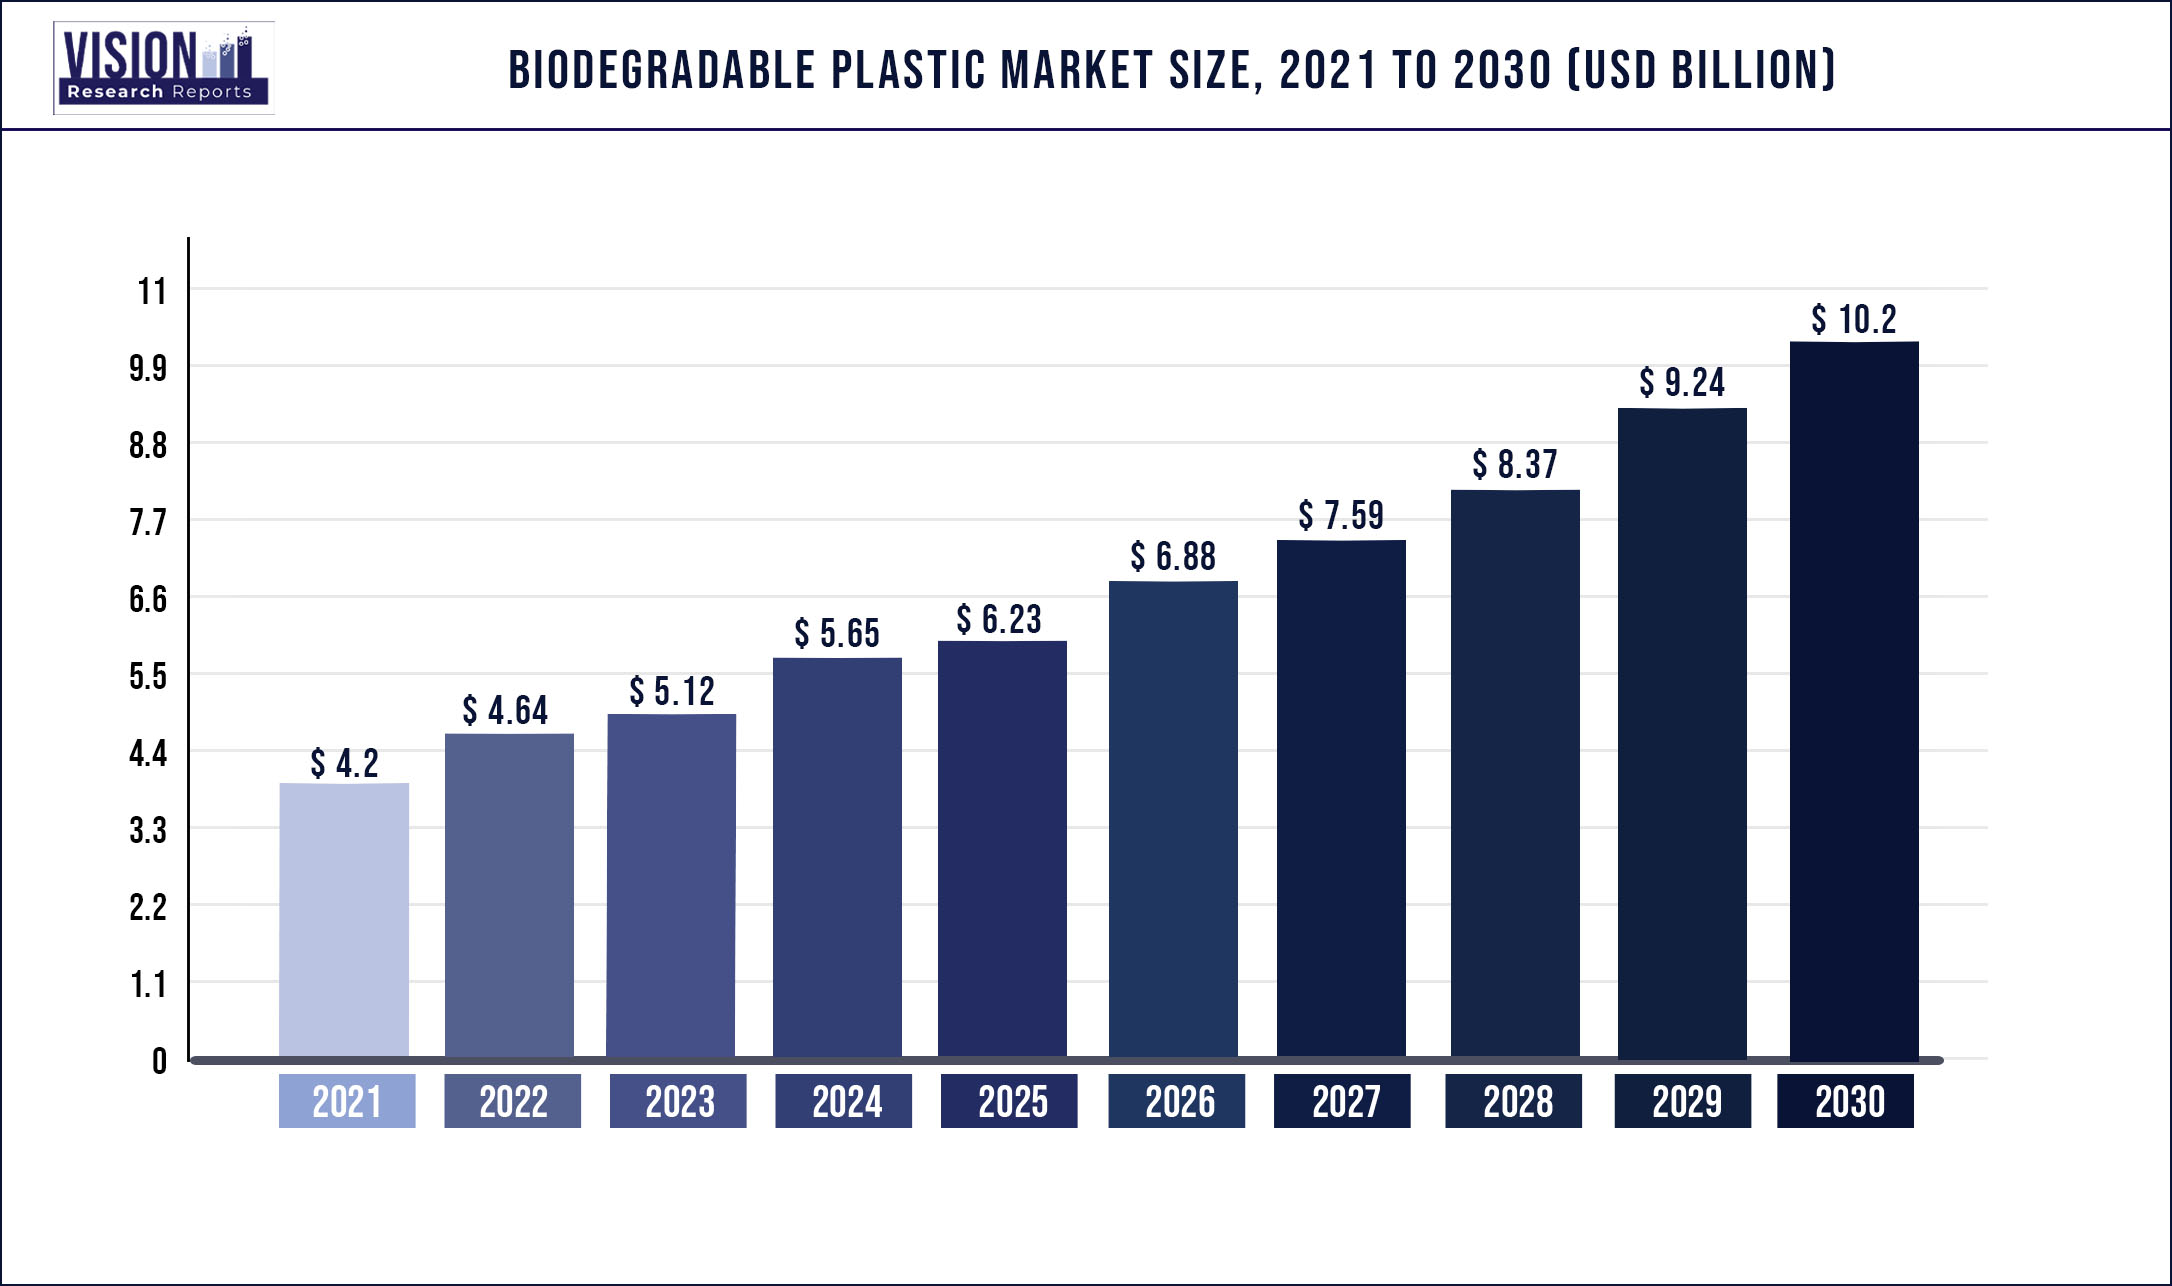 Biodegradable Plastic Market Size 2021 to 2030